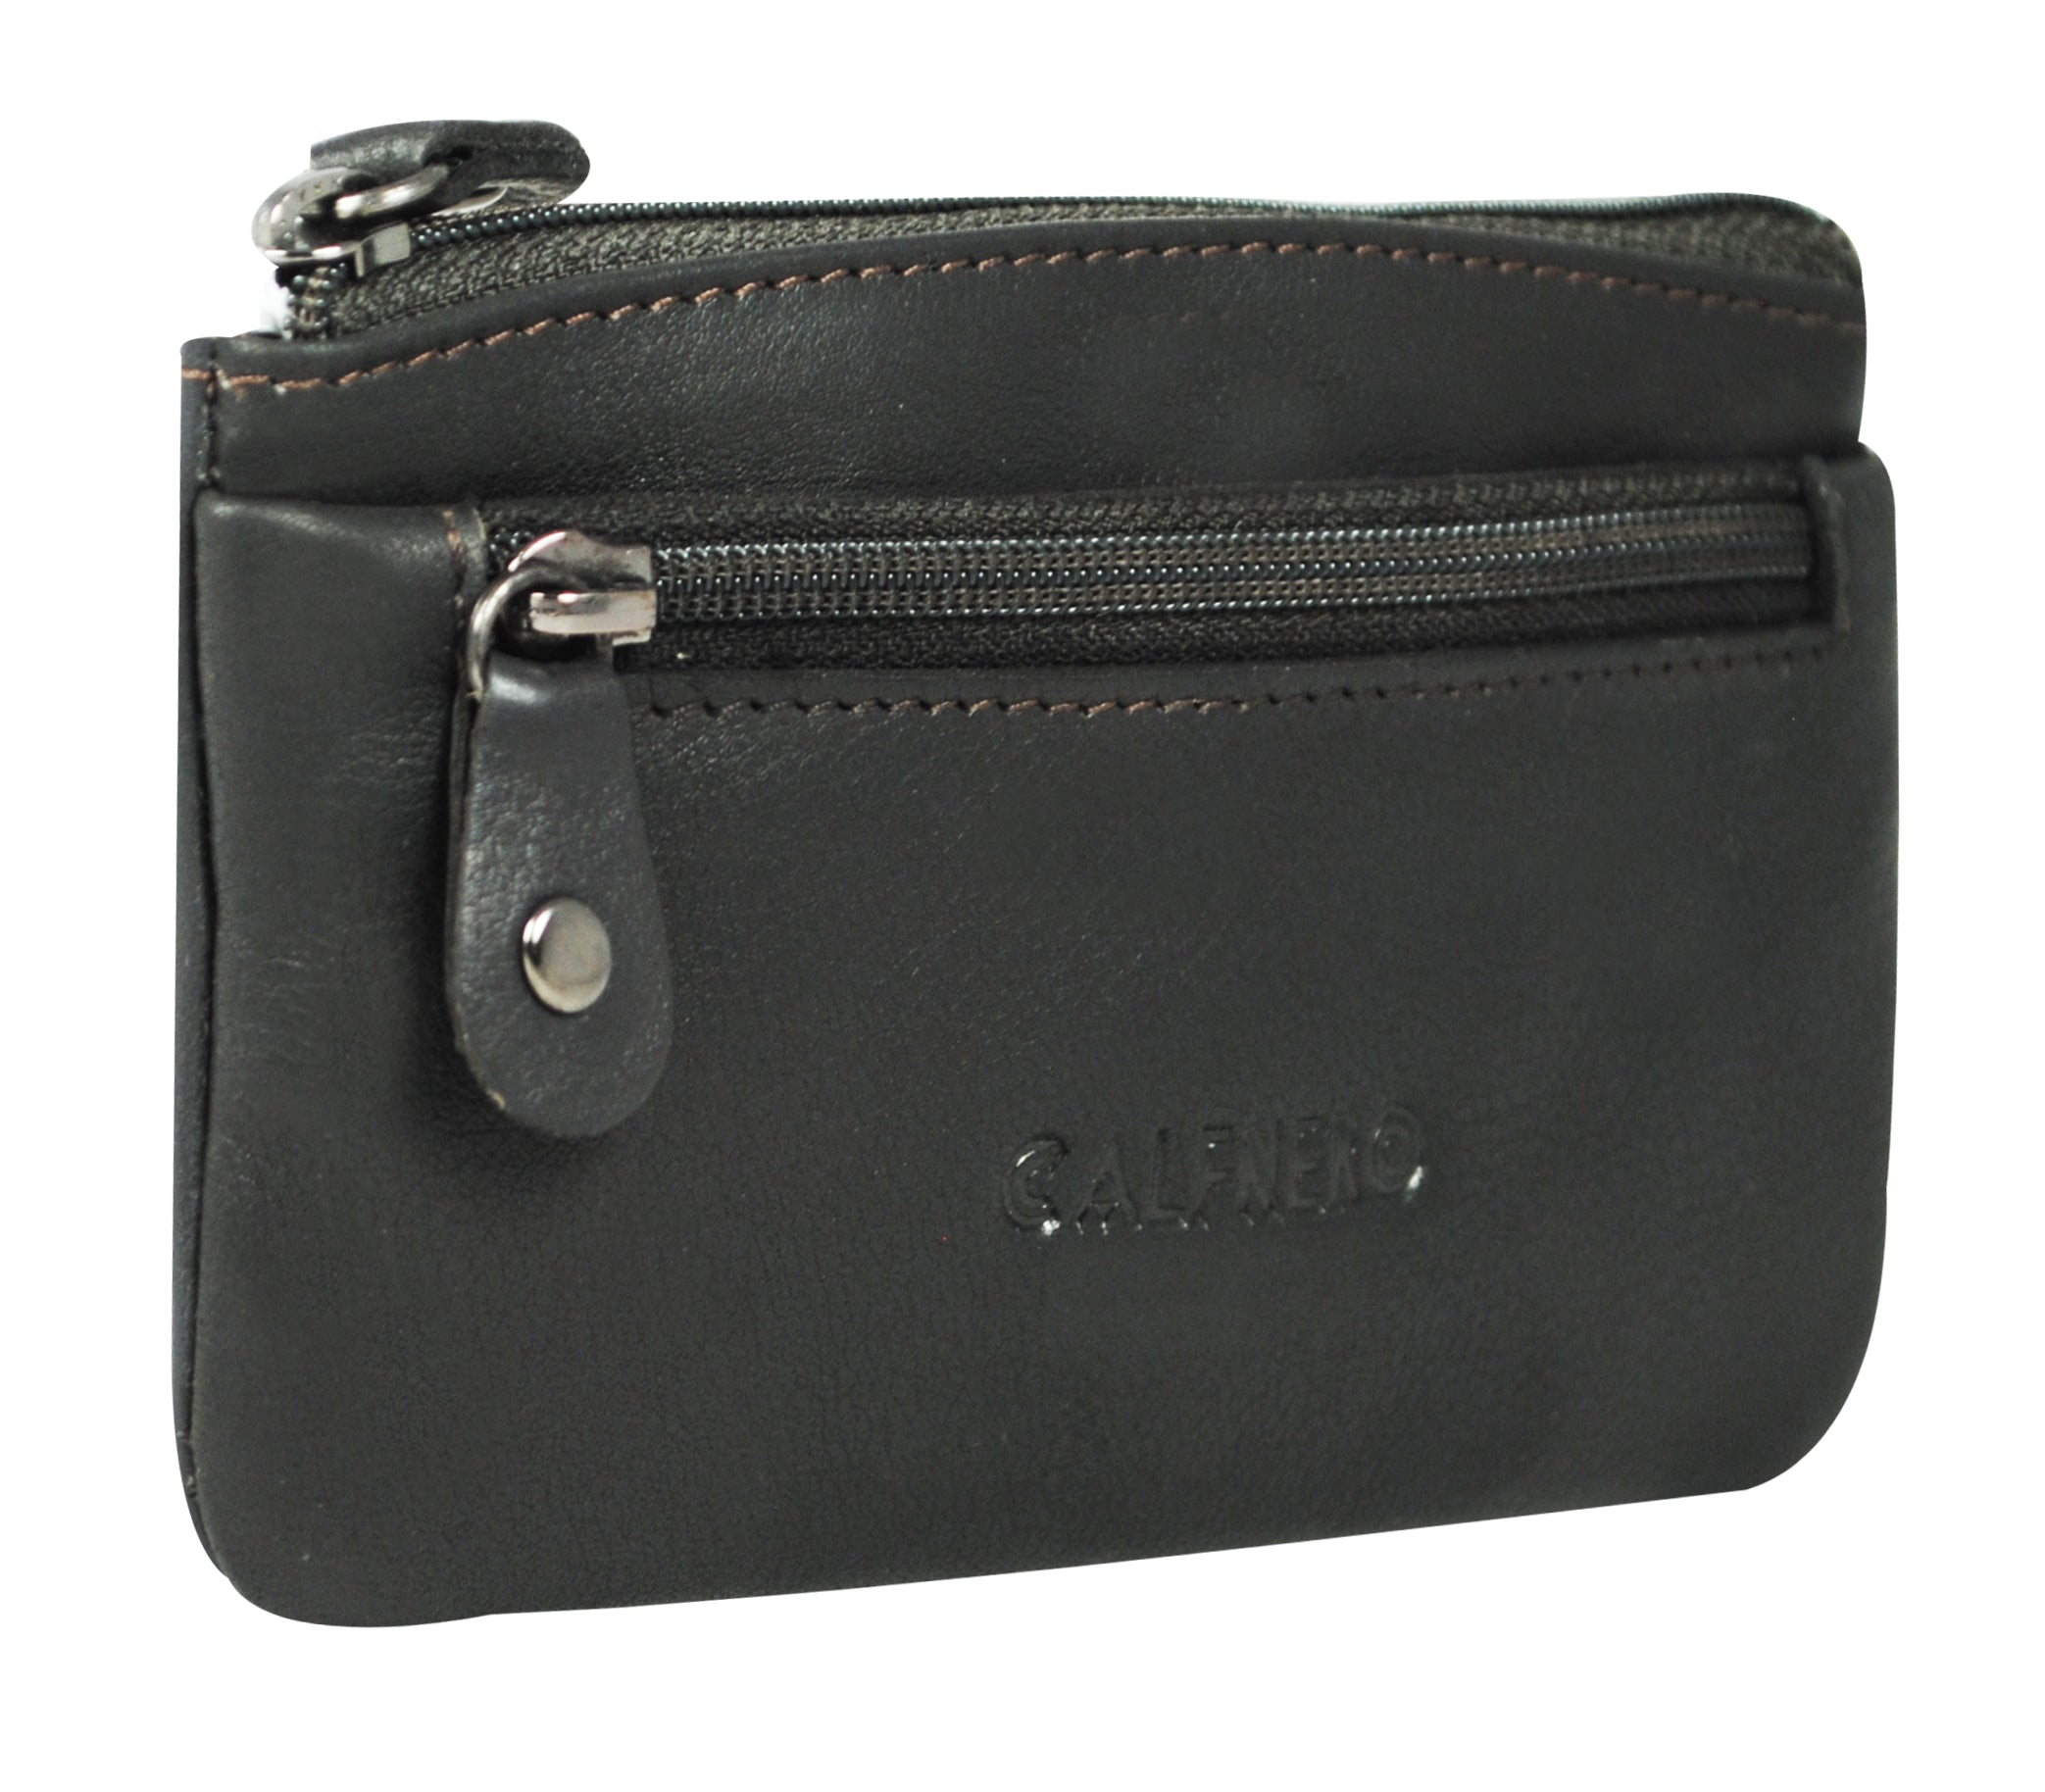 Buy FUR JADEN Black Faux Leather CardHolder Money Wallet Zipper Coin Purse  with 9 Credit Card Slots online